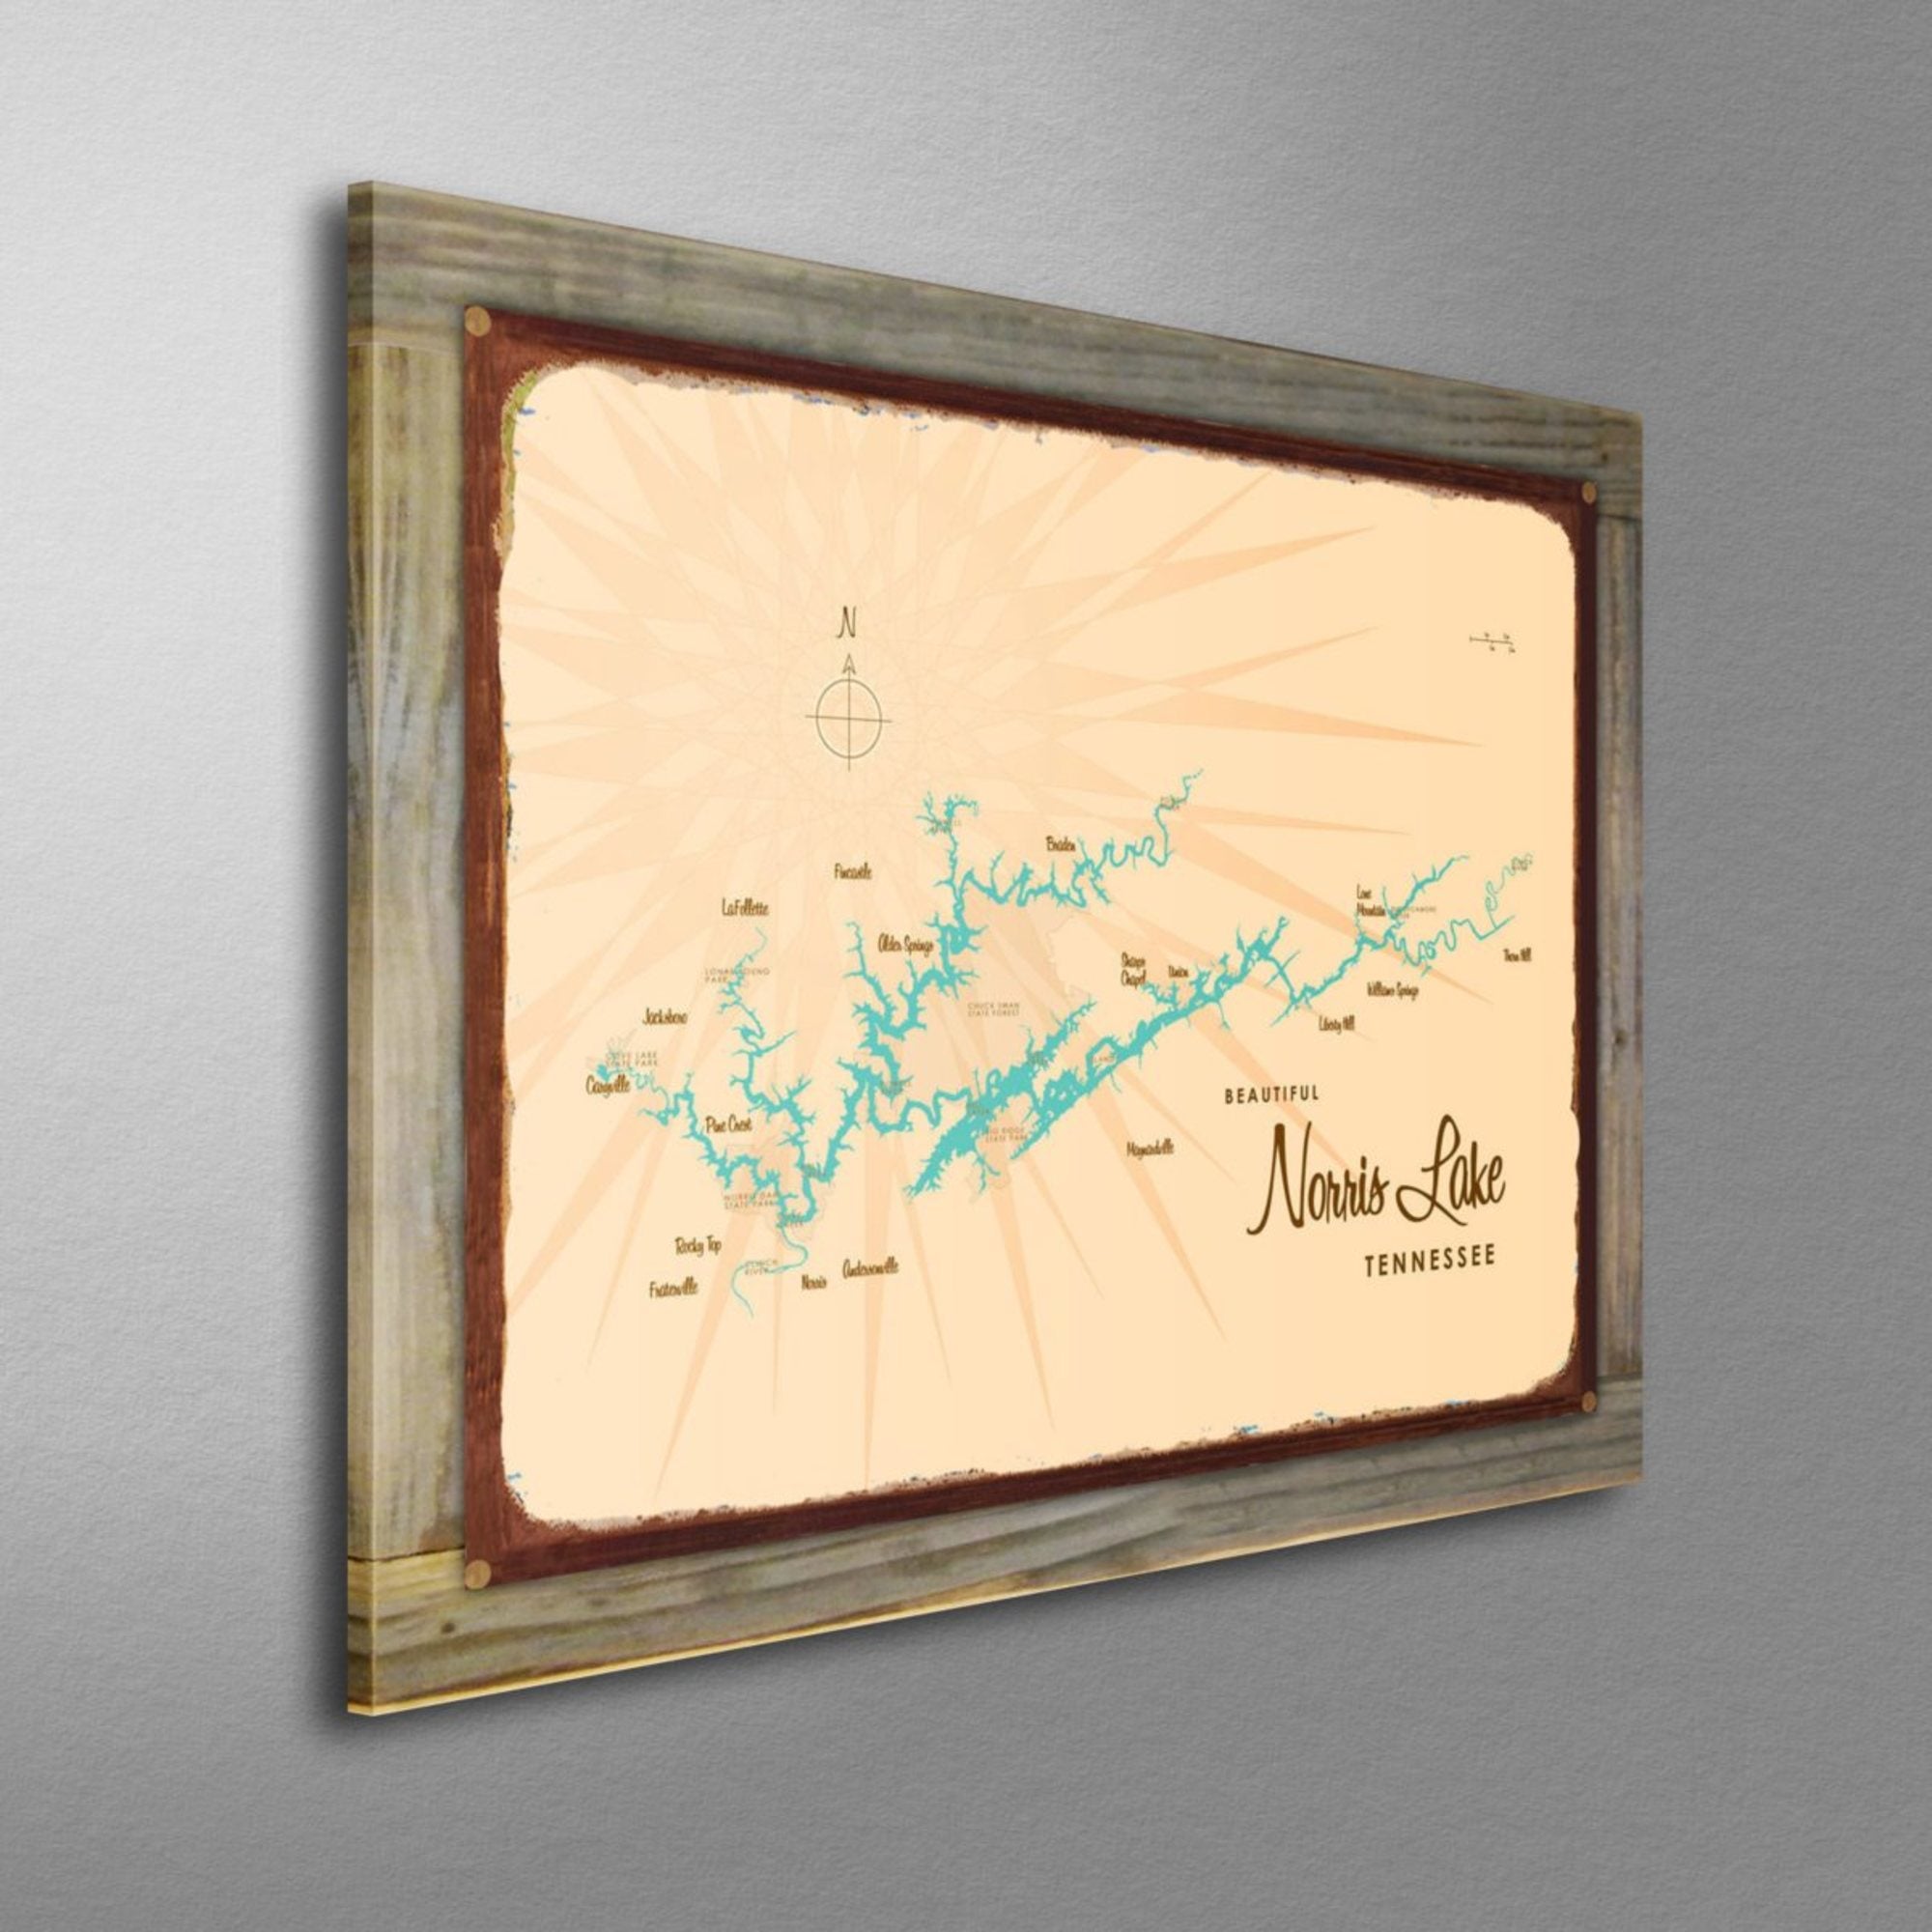 Norris Lake Tennessee, Wood-Mounted Rustic Metal Sign Map Art